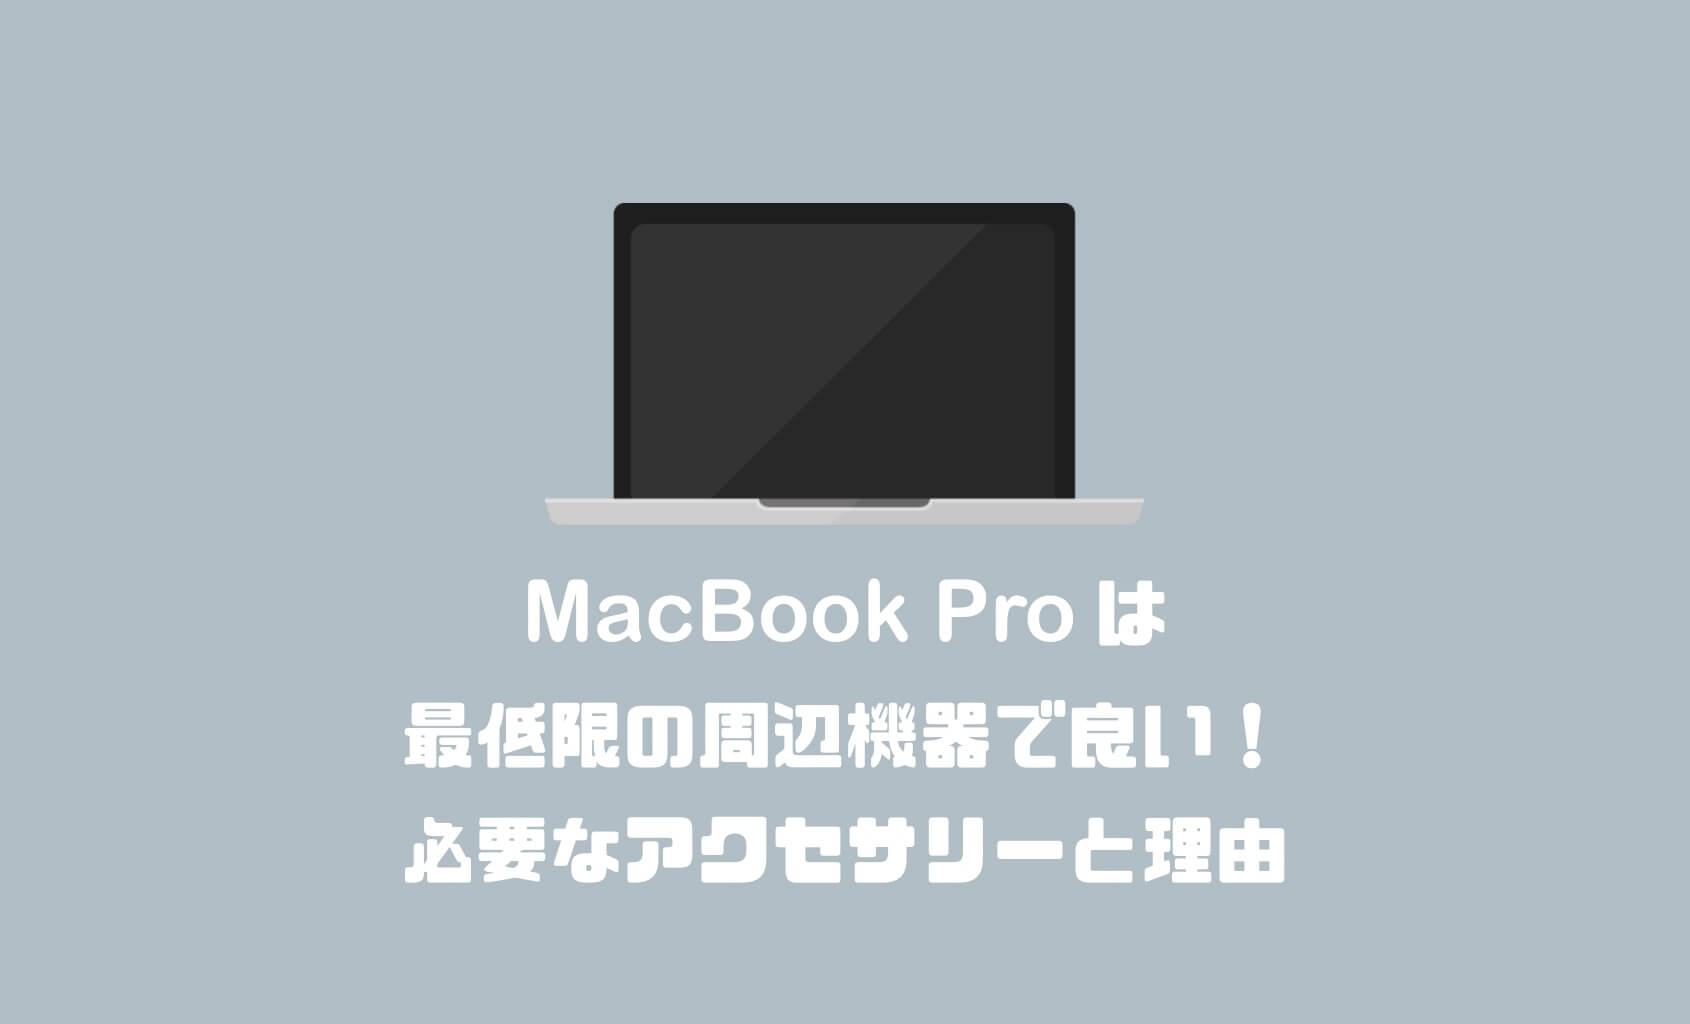 MacBook Pro mid2014 良品 作動確認済み+bonfanti.com.br